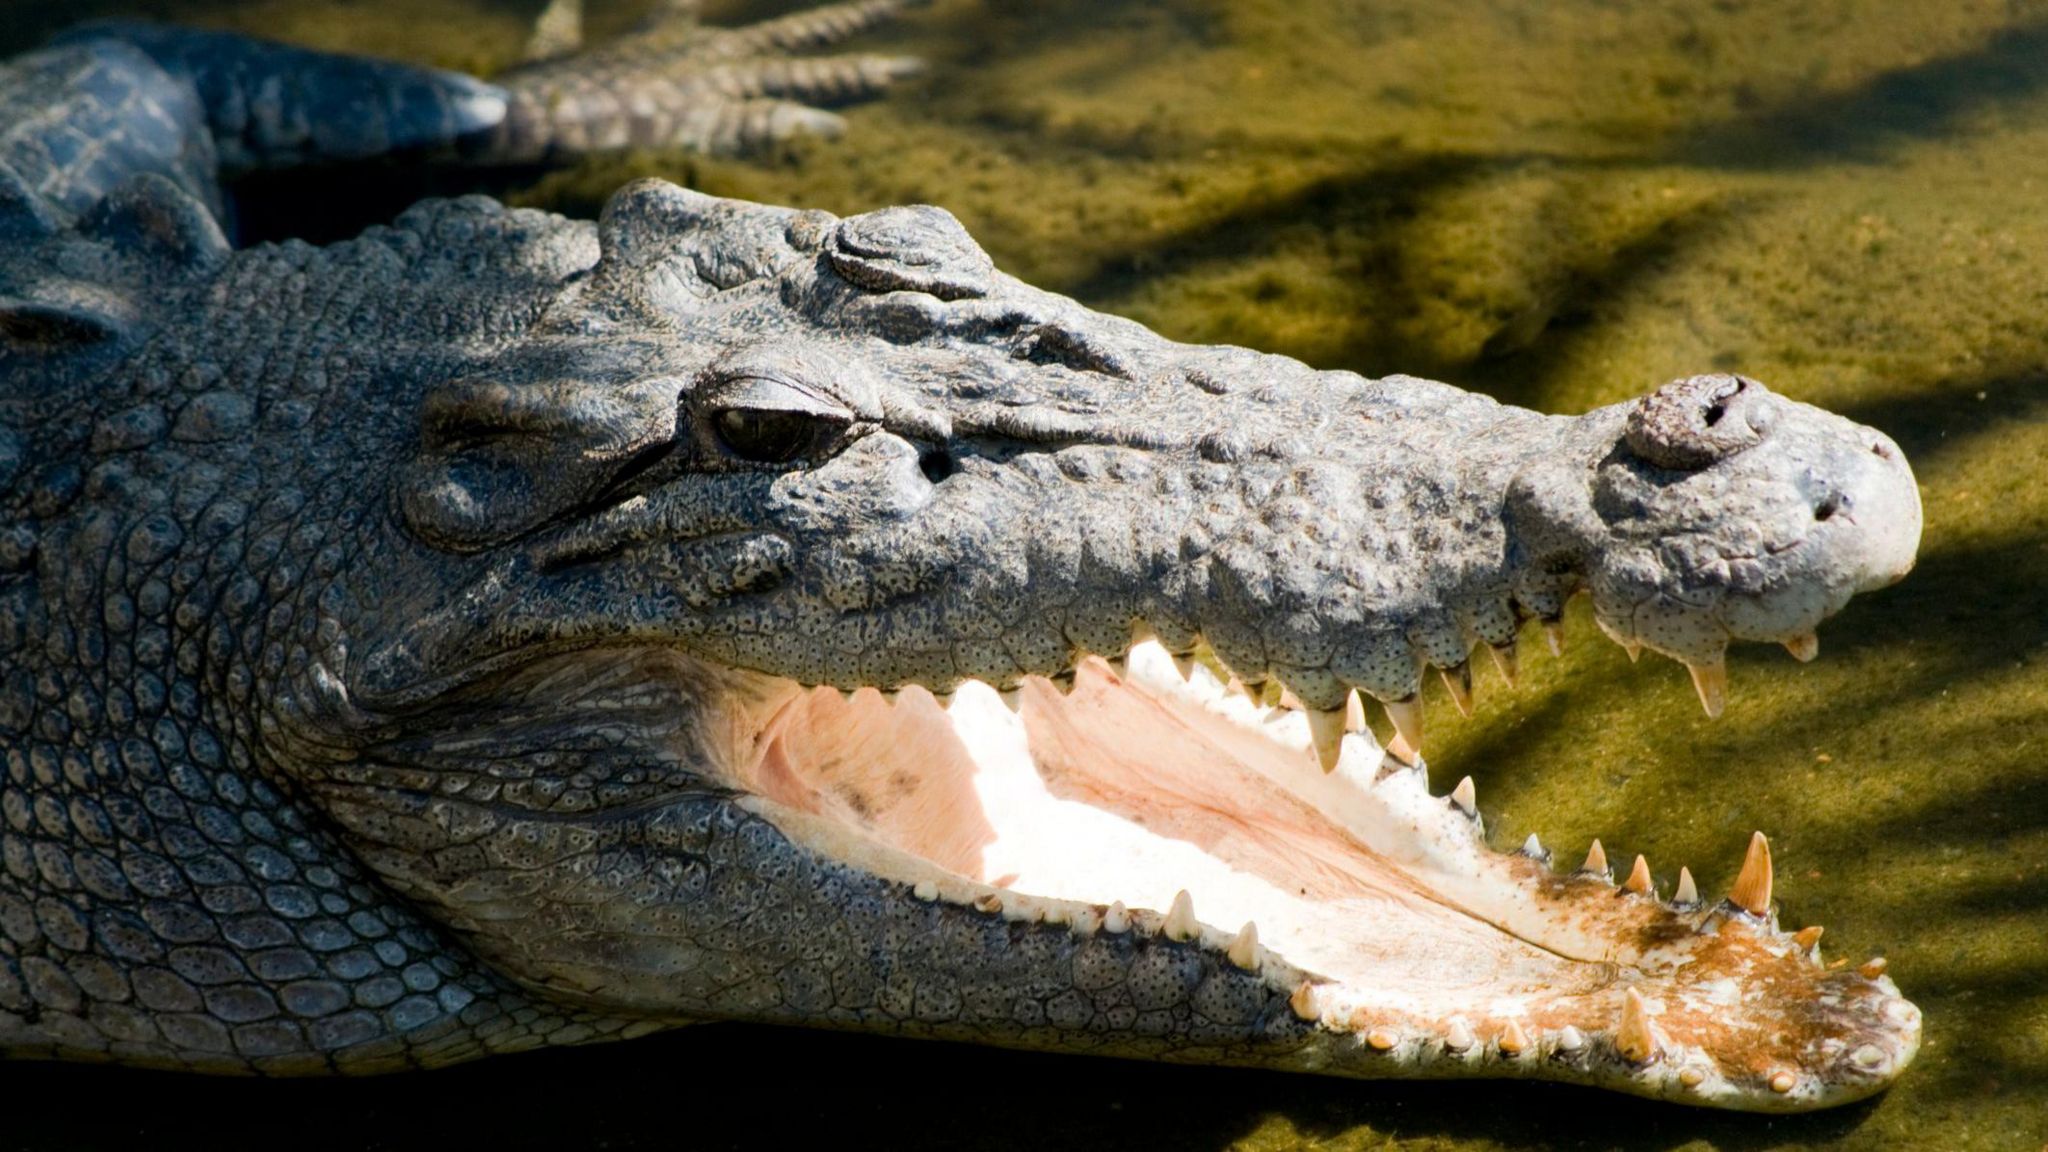 Saltwater crocodile 